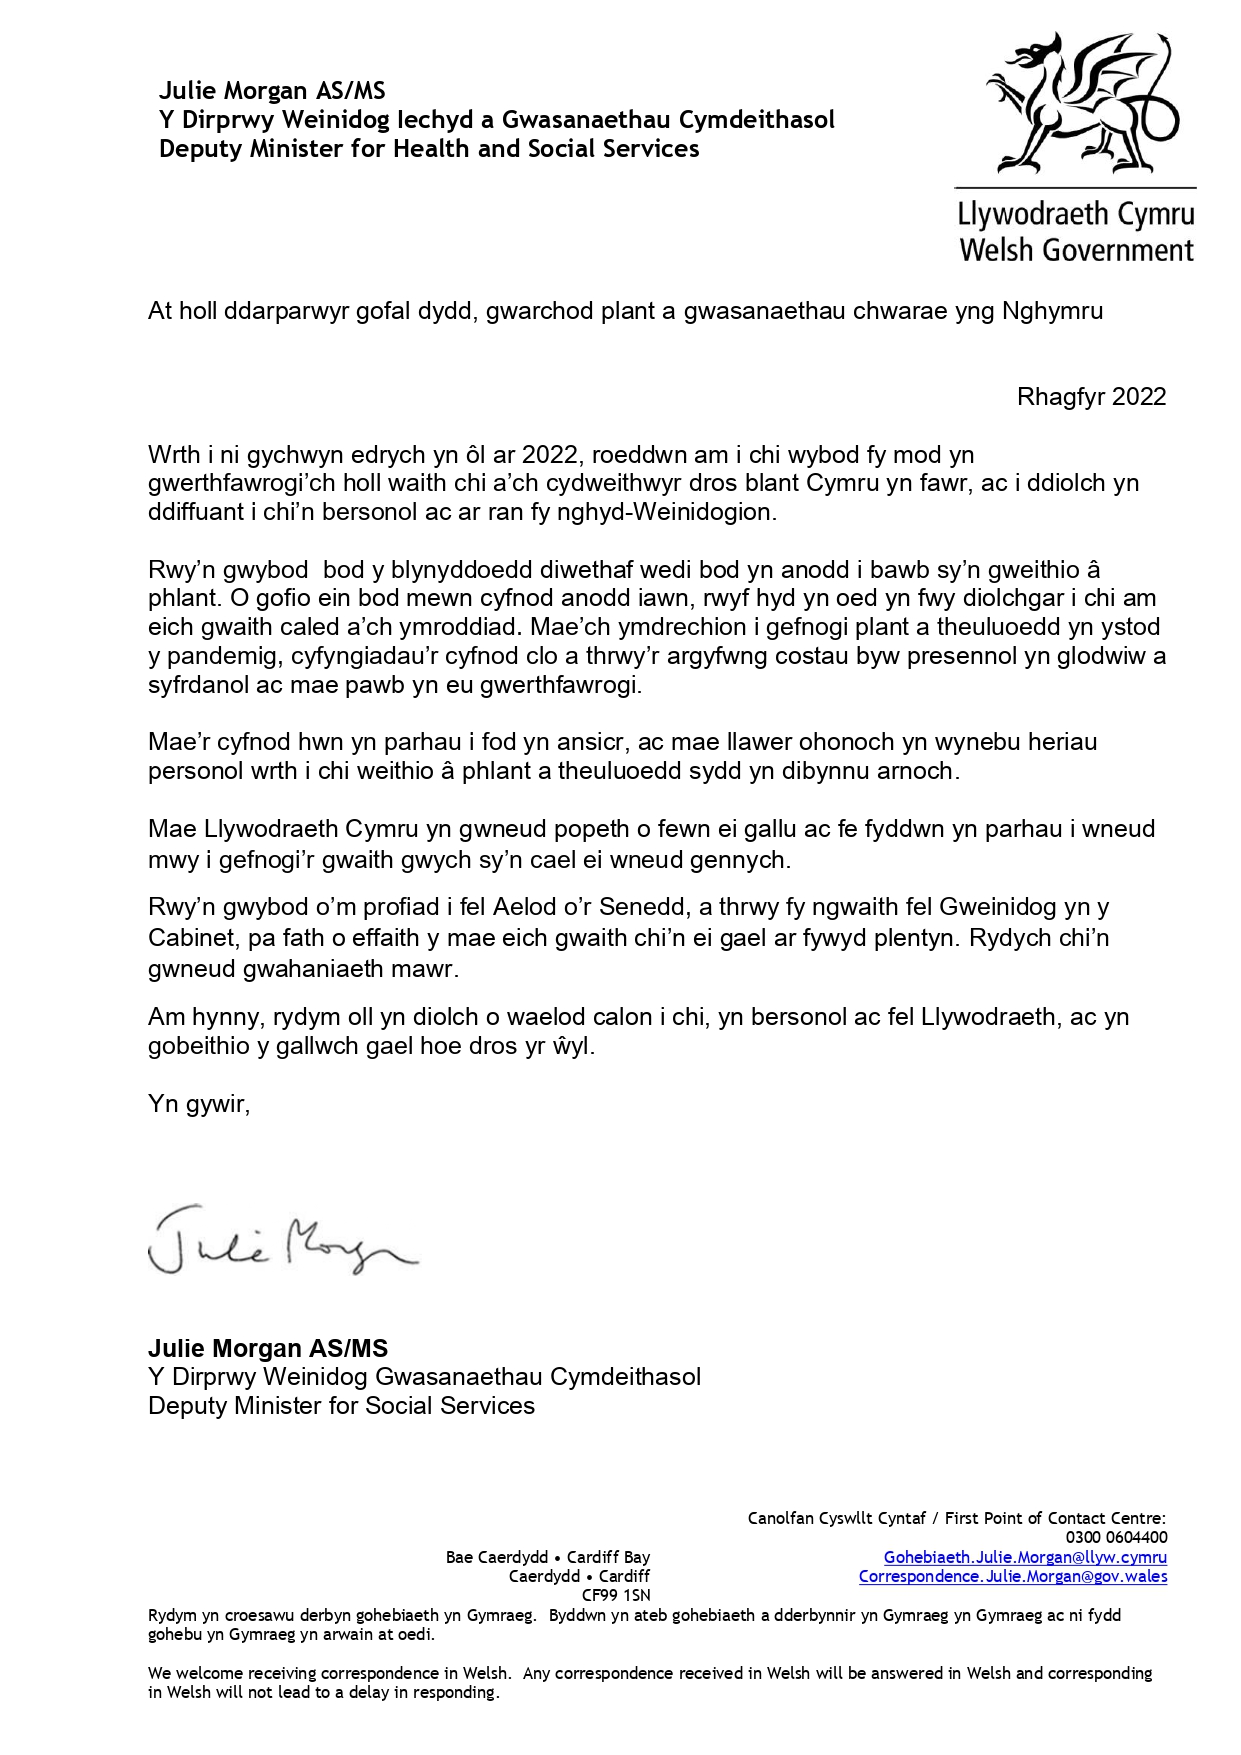 Letter from Deputy Minister